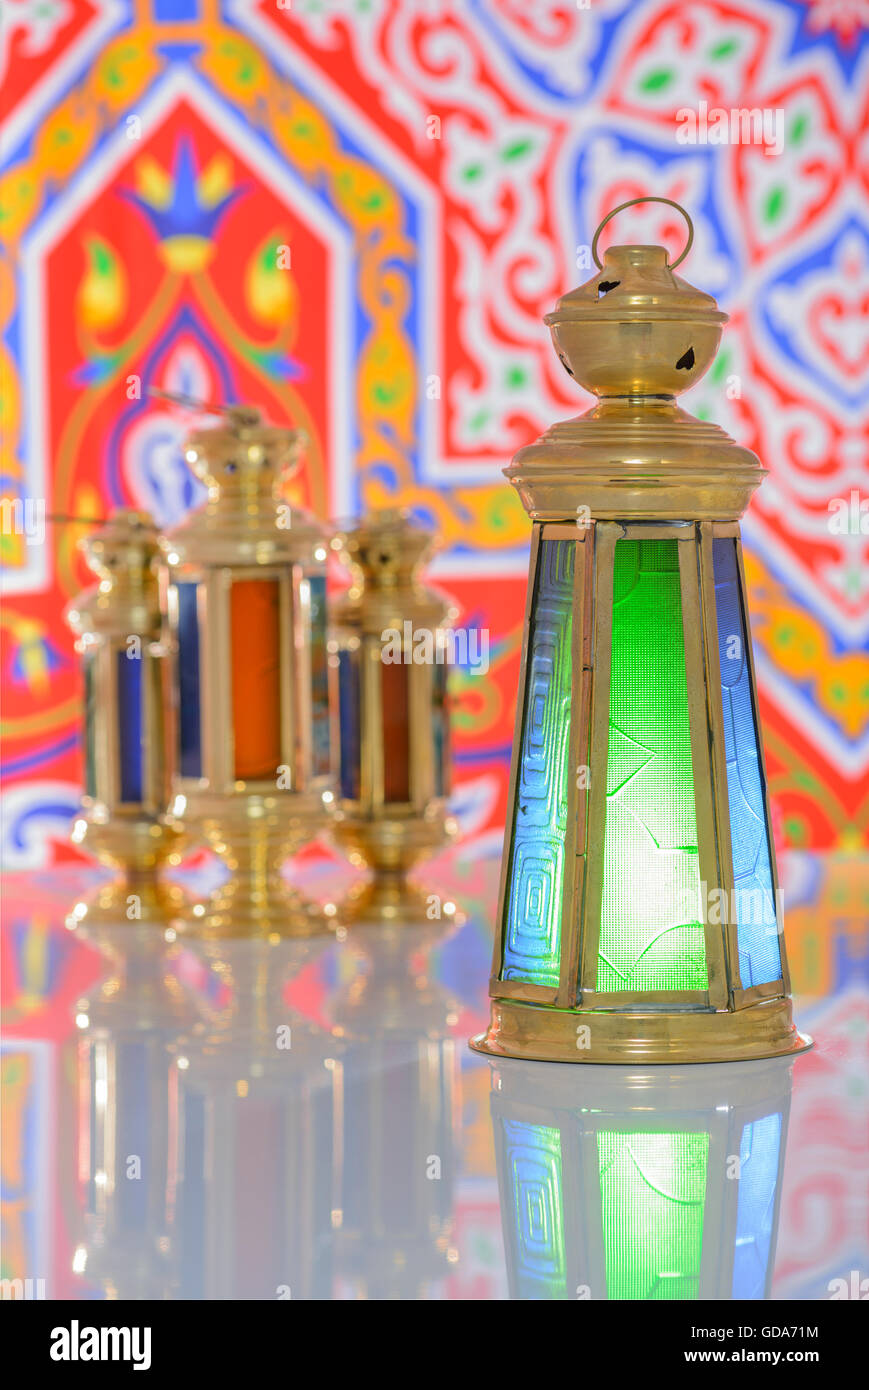 Group of Four Shiny Lanterns over Ramadan Fabric Stock Photo